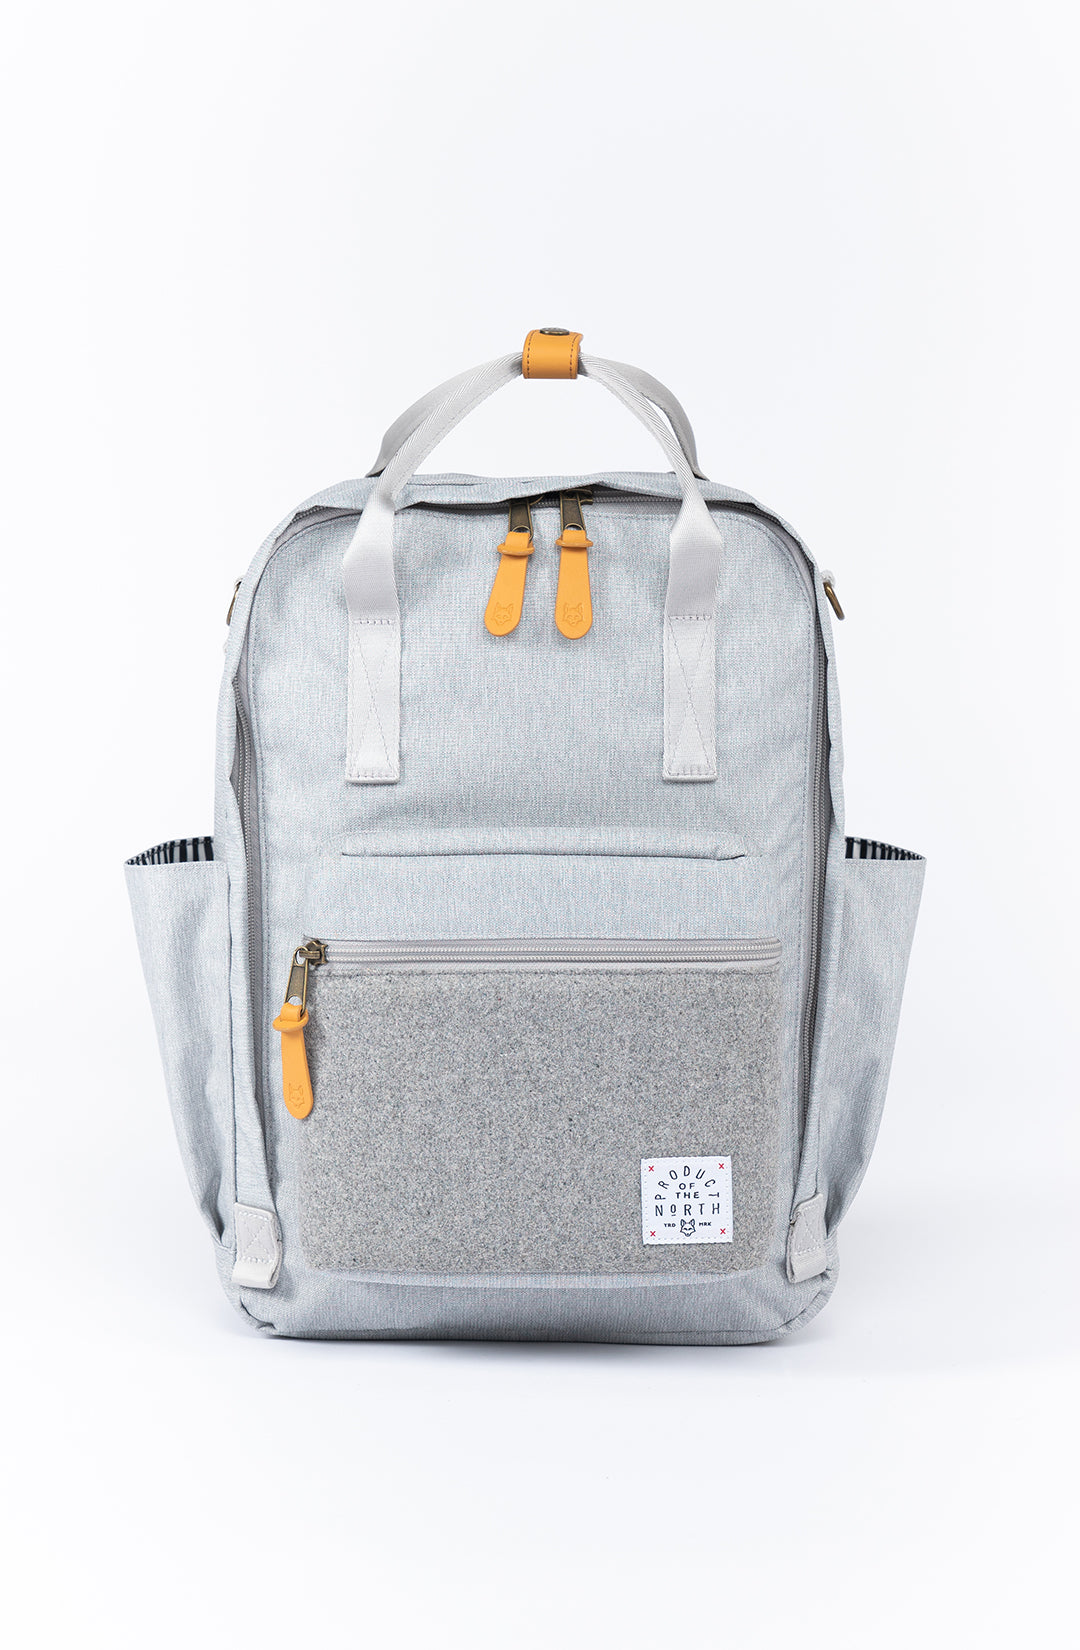 Elkin Diaper Bag Backpack - Grey [Sustainable] // POTN – Product